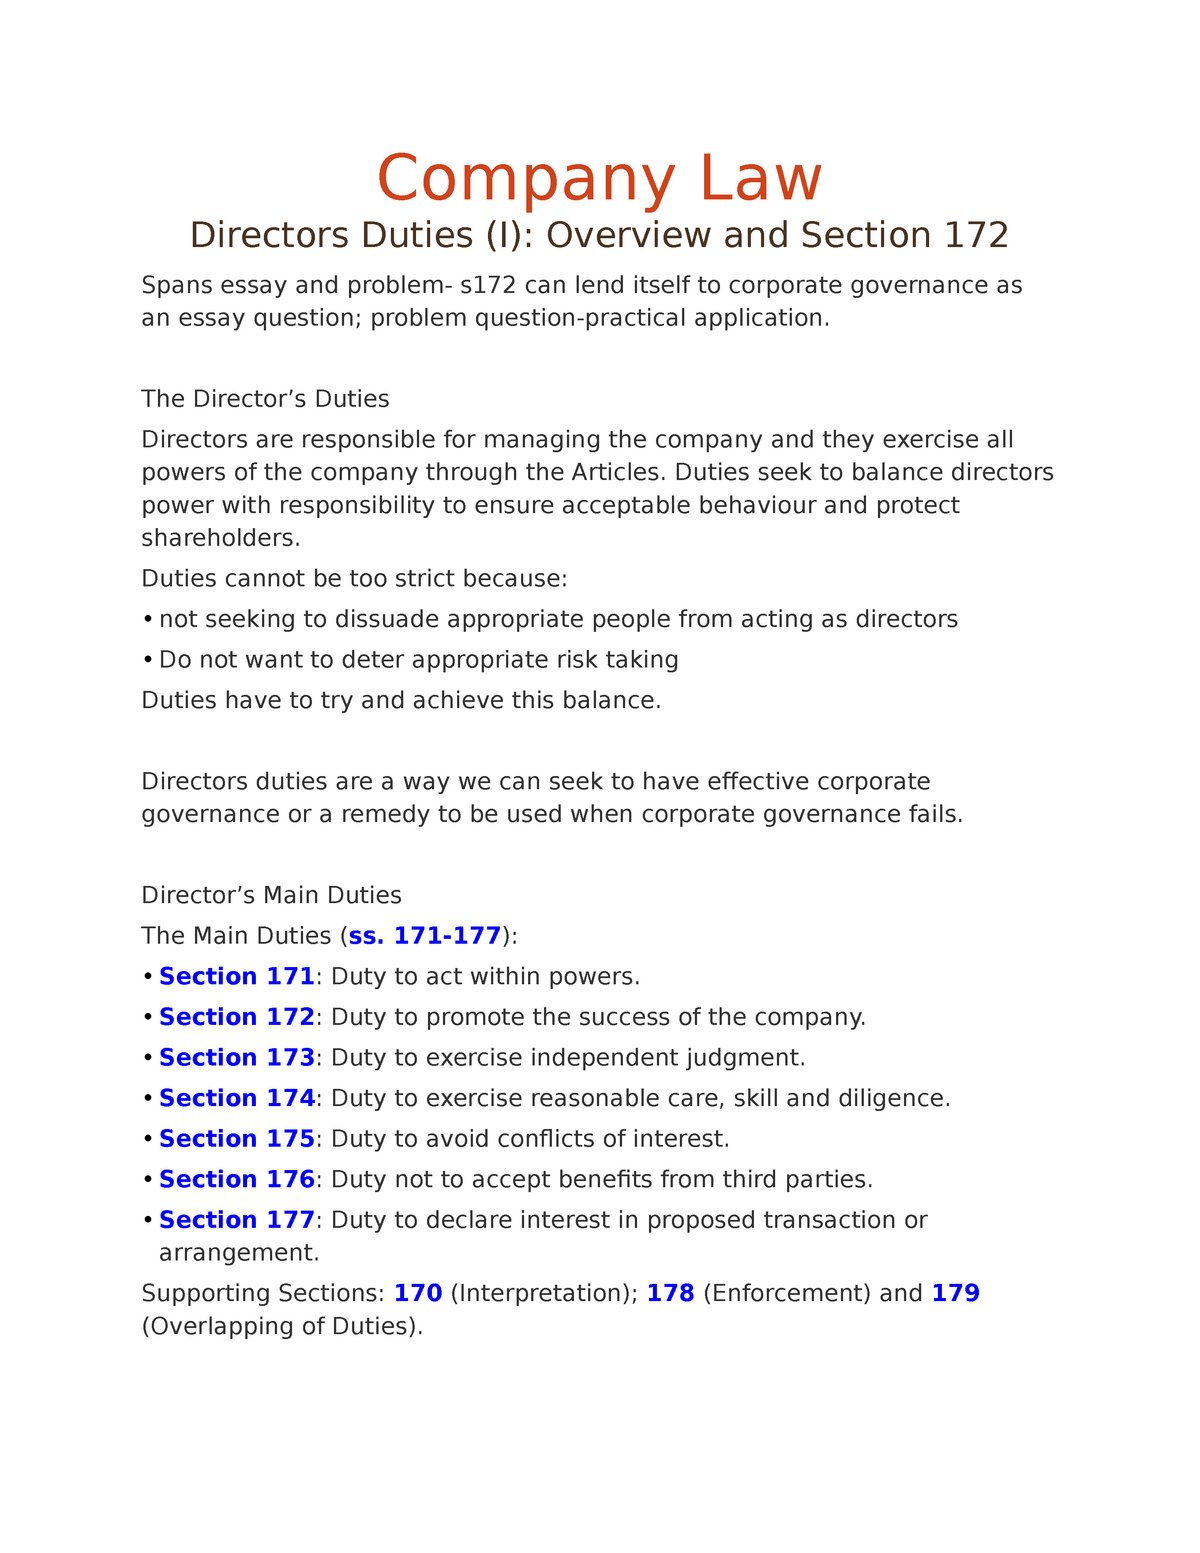 company law essay on directors duties